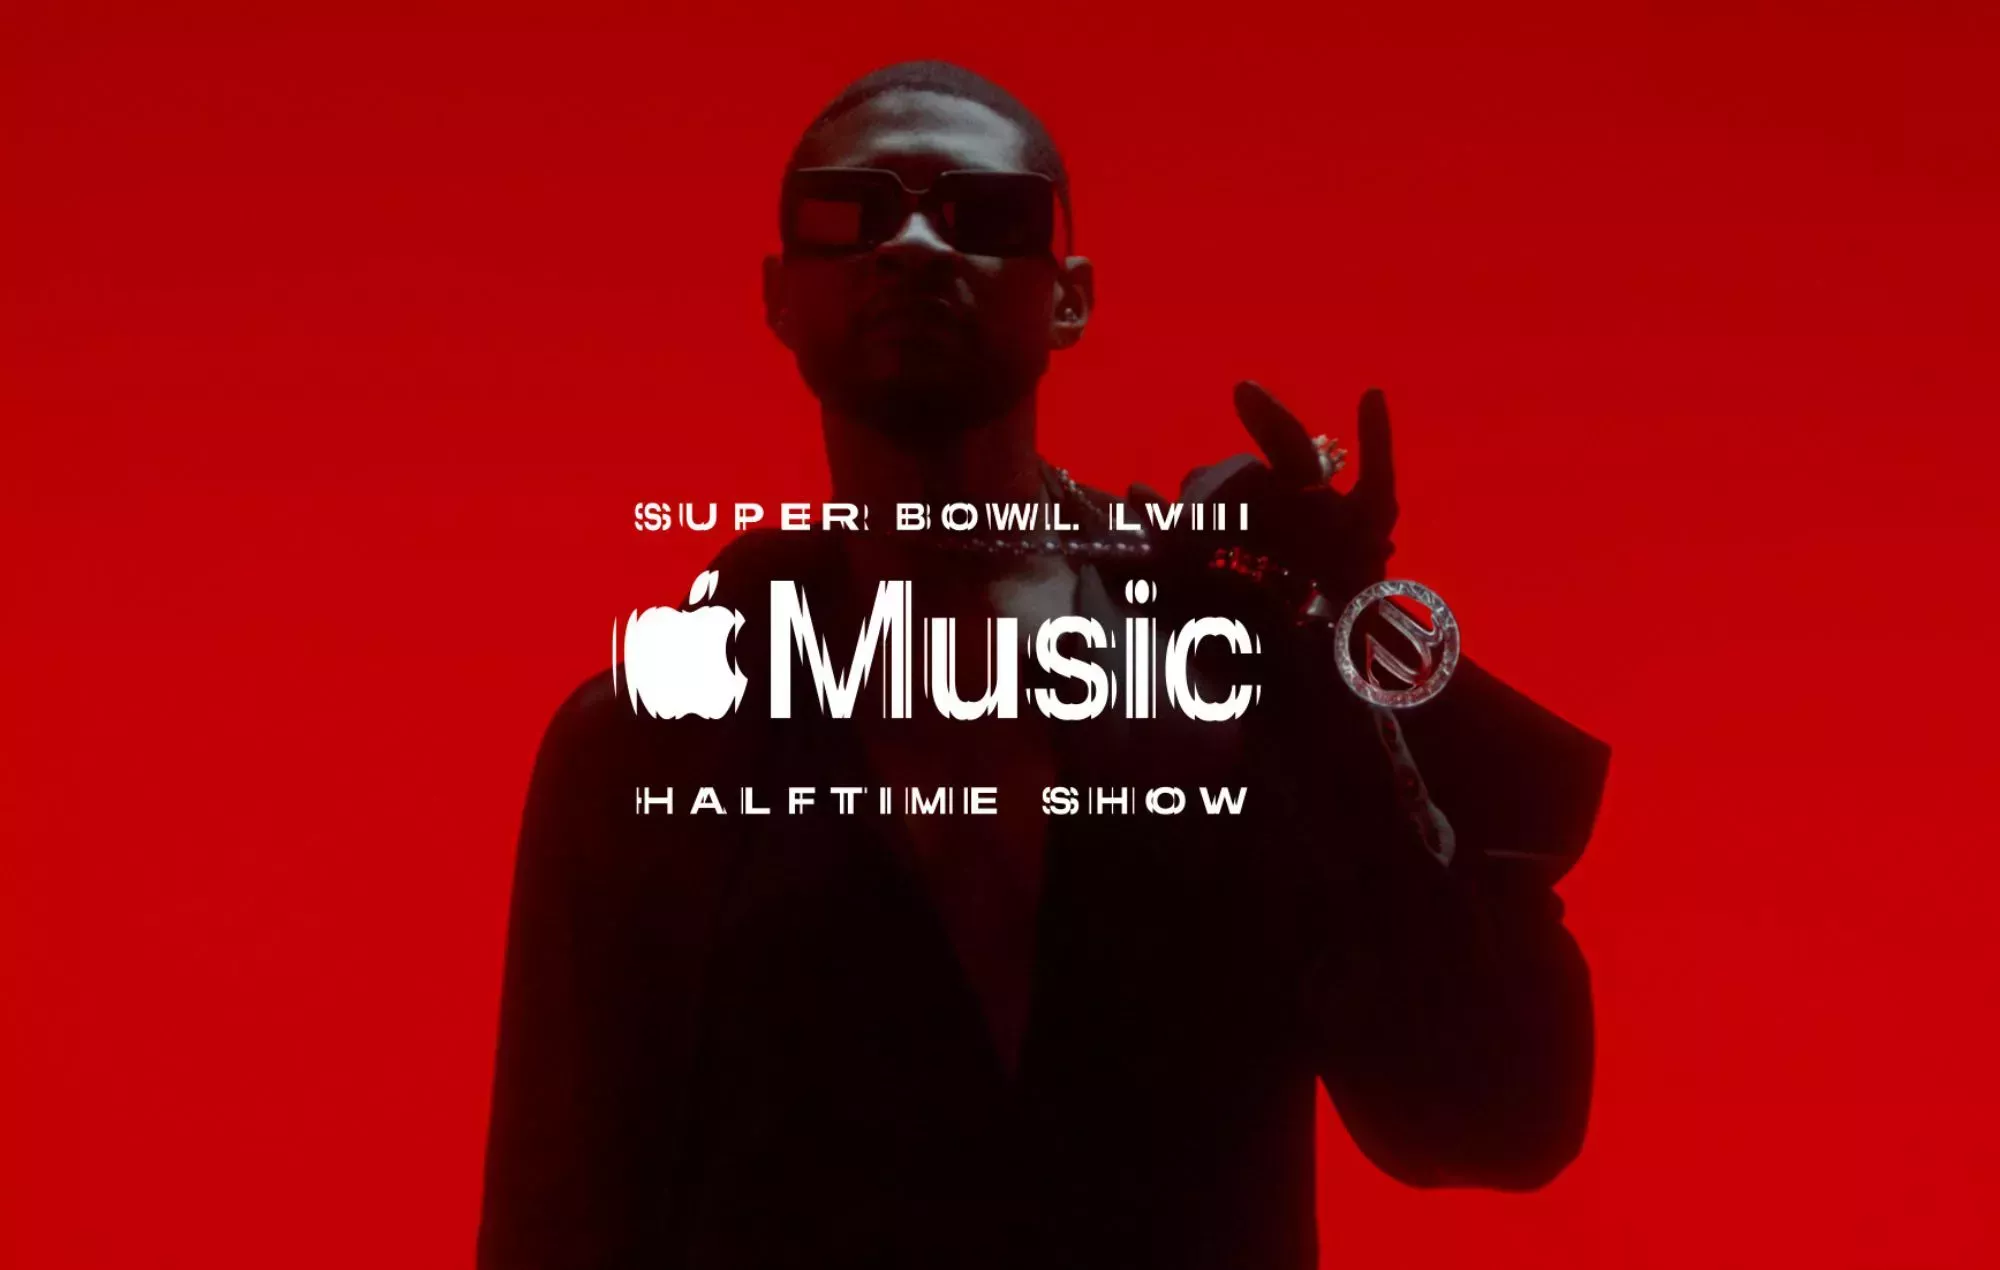 El tráiler del Halftime Show de la Super Bowl de Usher adelanta una